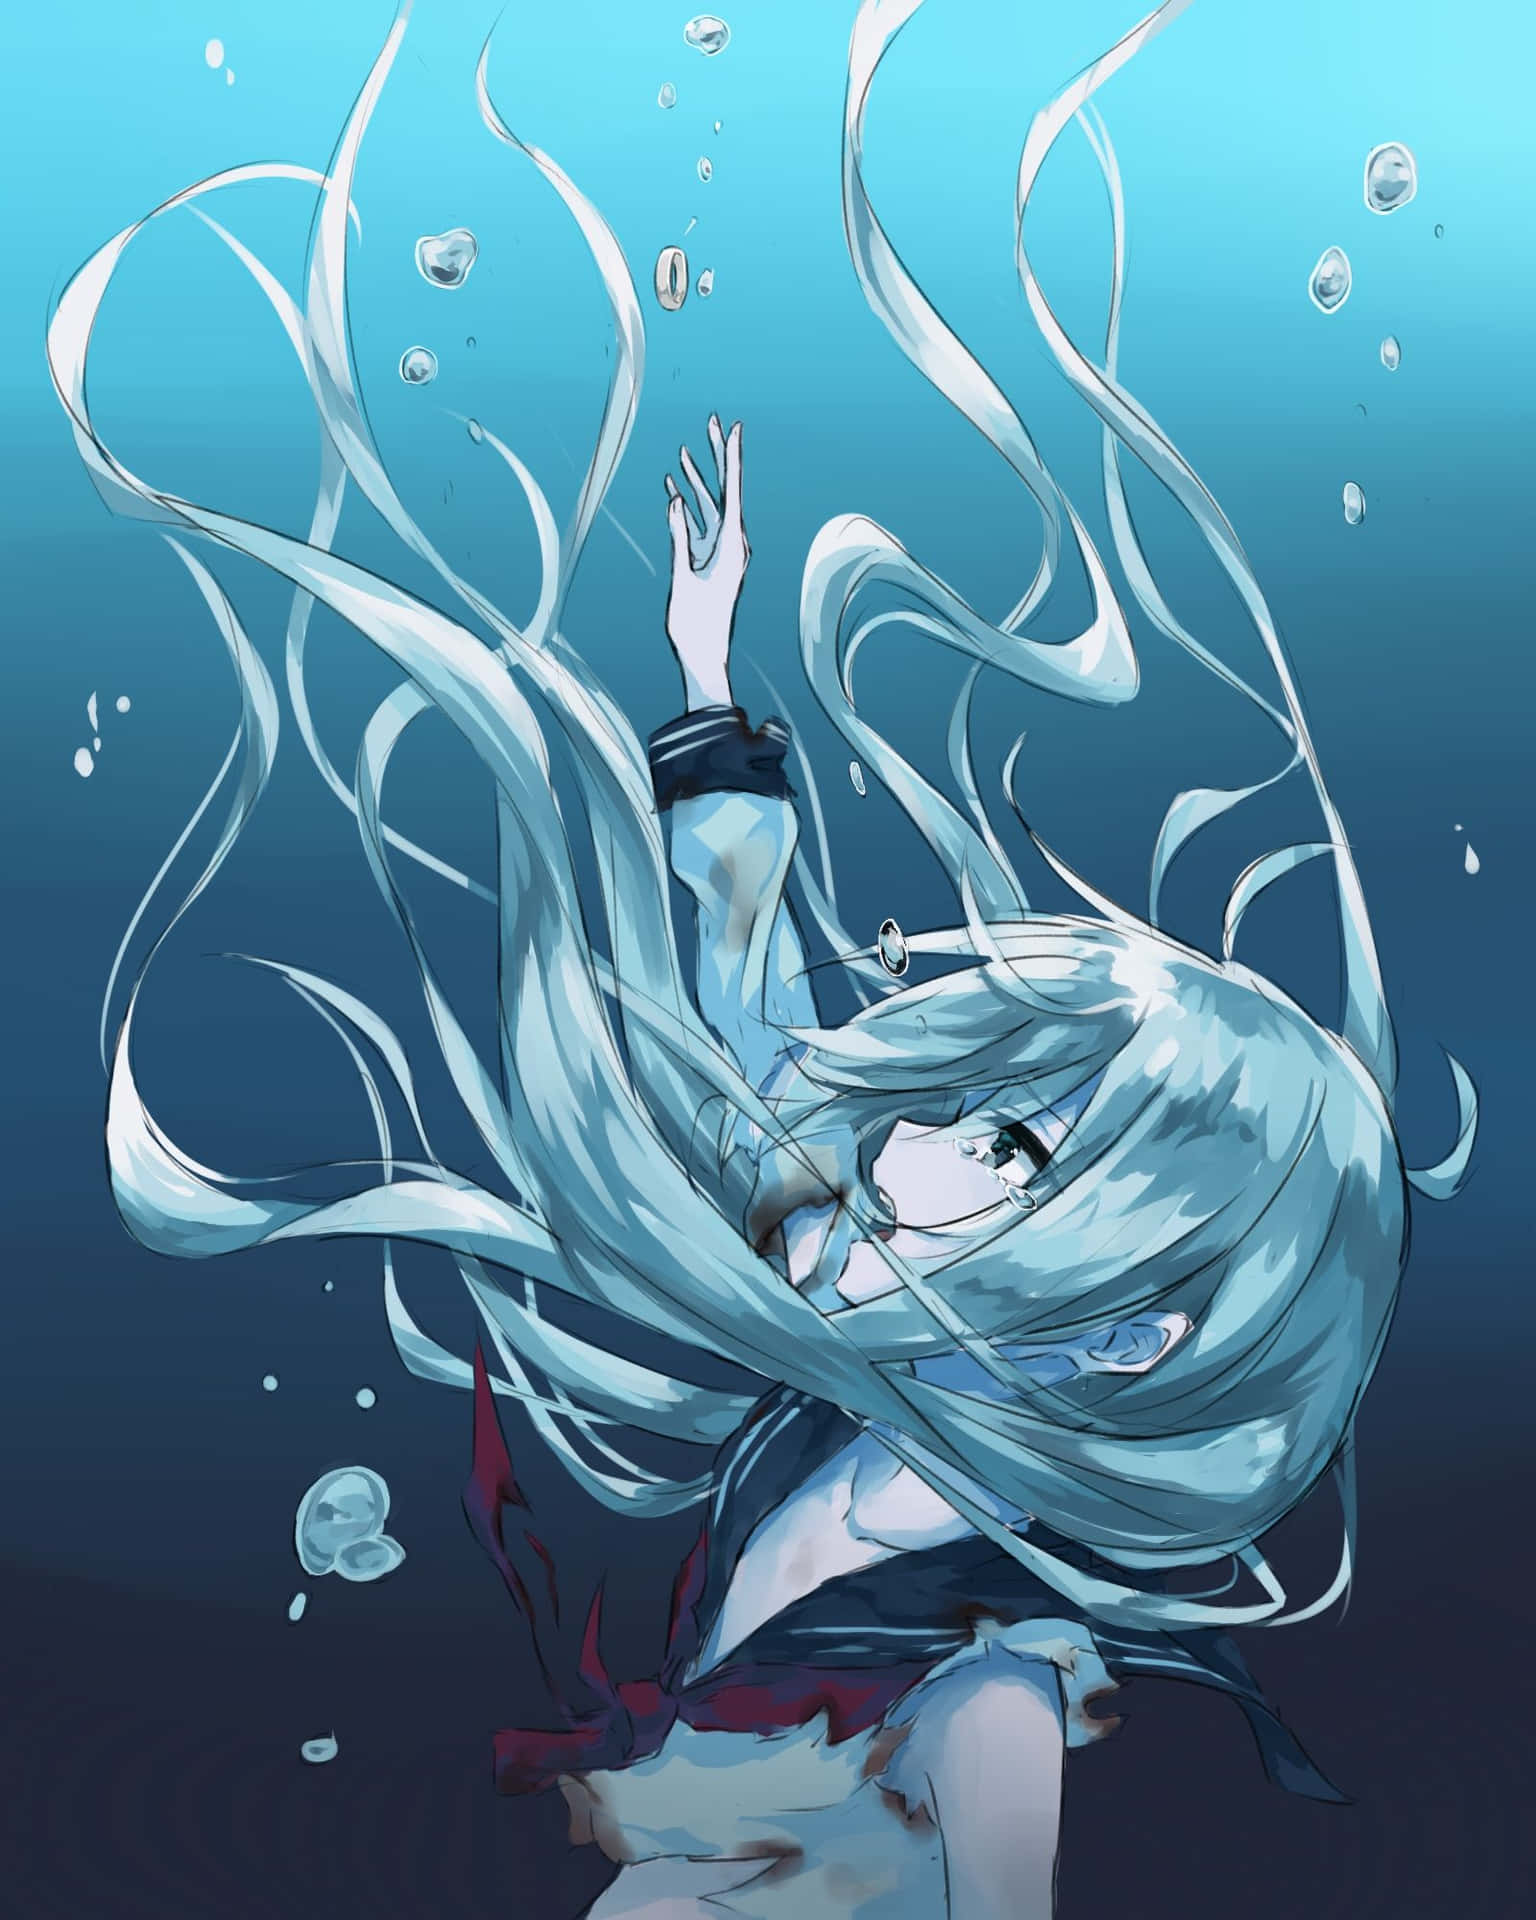 Cool Sad Anime Girl Falling Into The Water Wallpaper